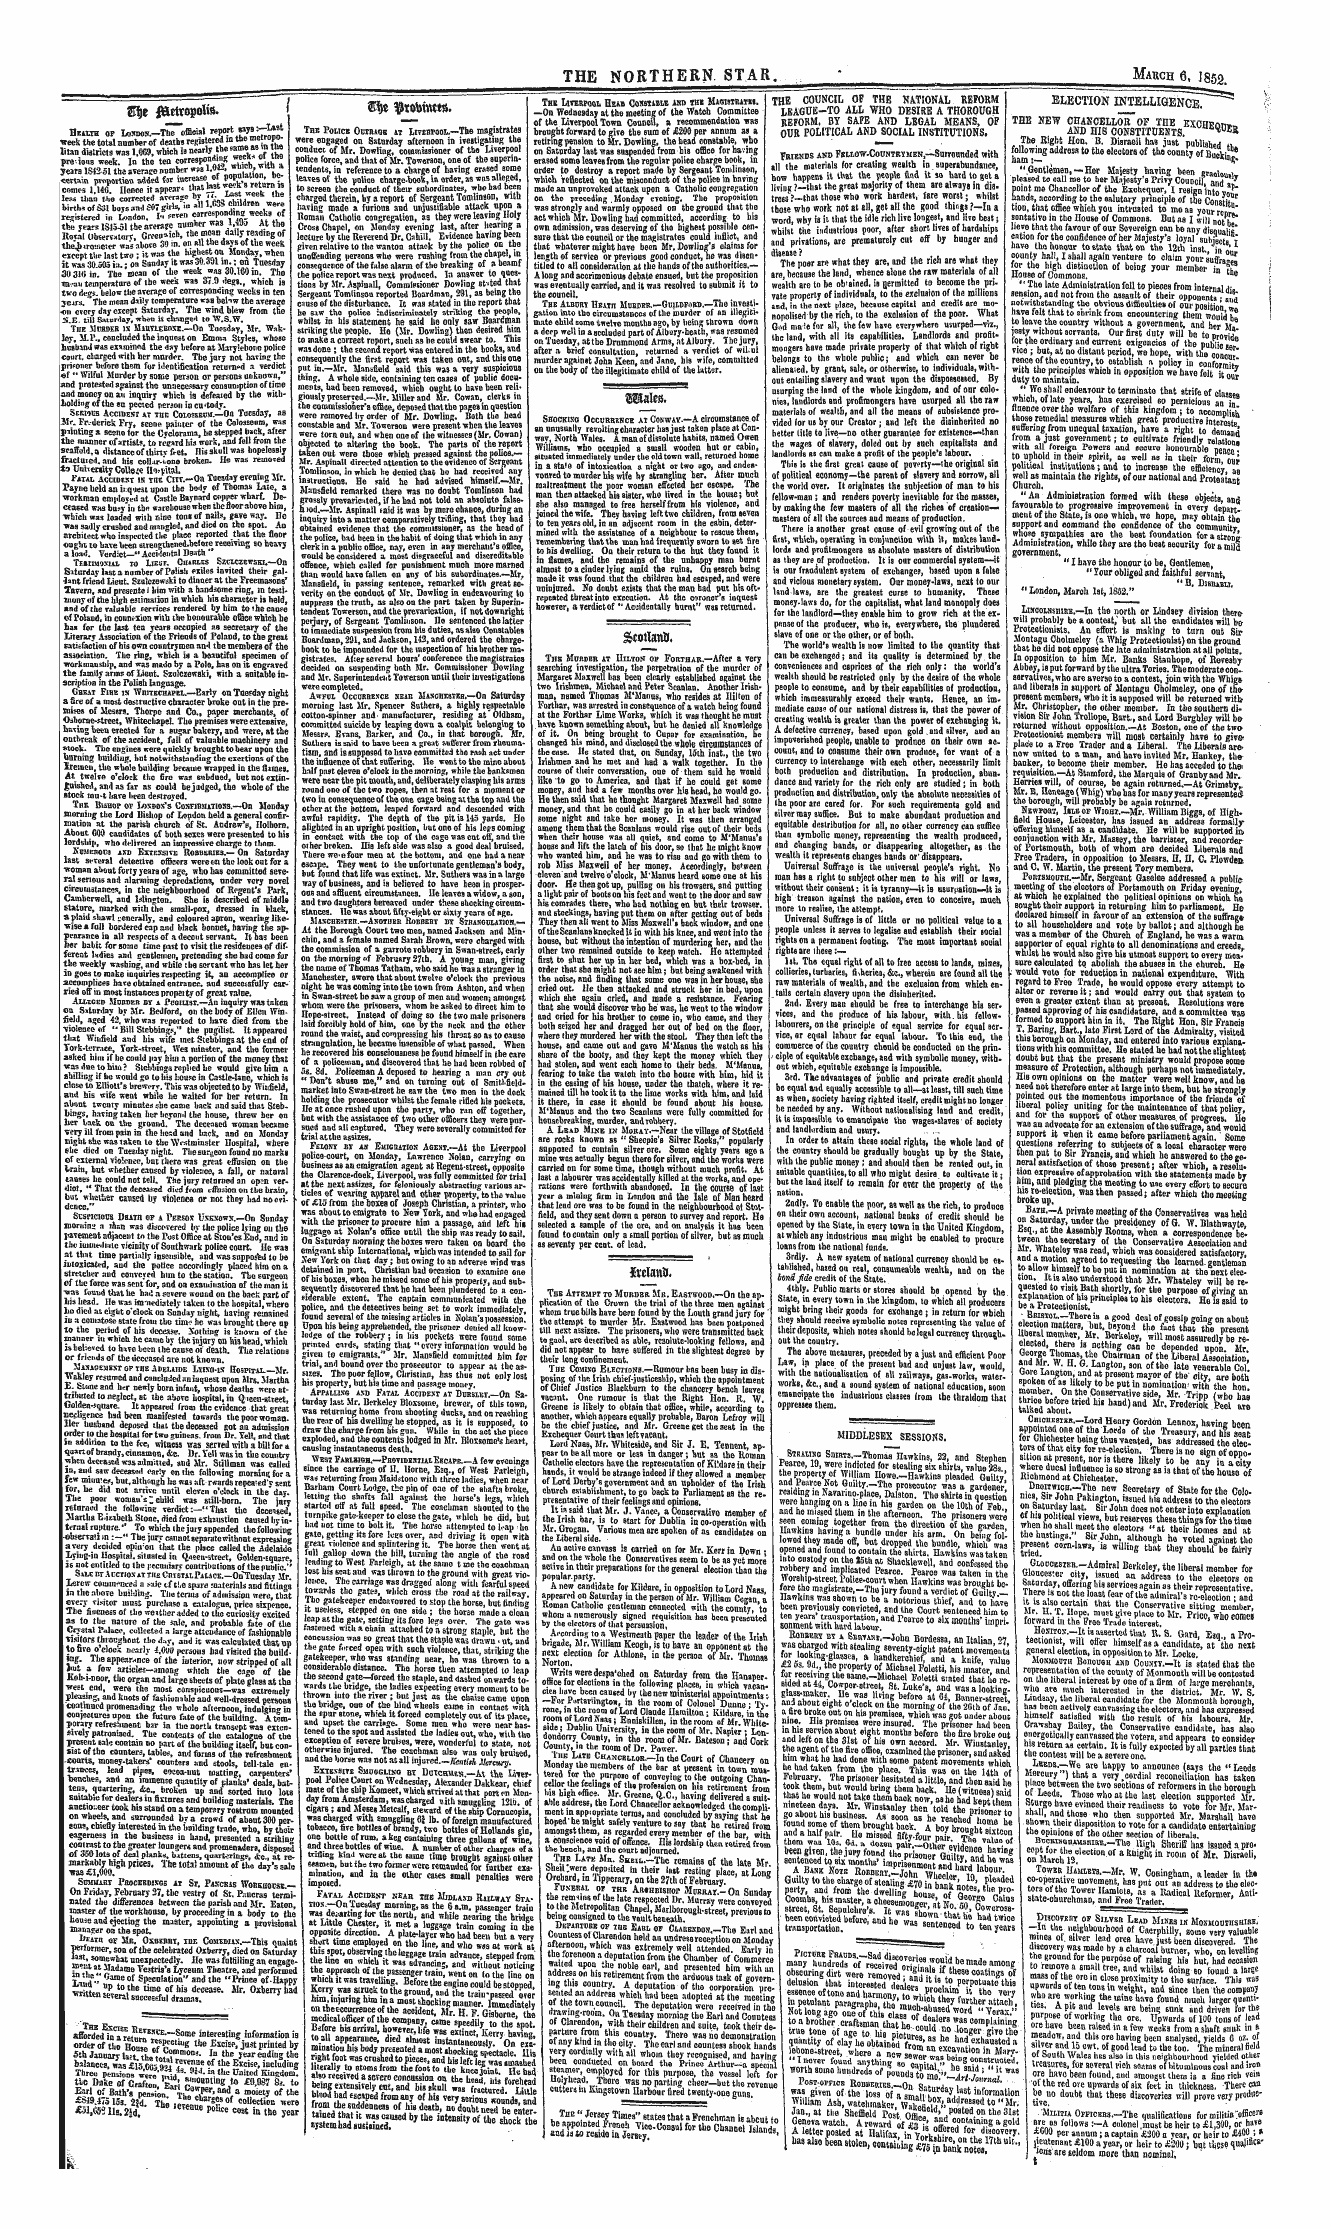 Northern Star (1837-1852): jS F Y, 1st edition - Scotland